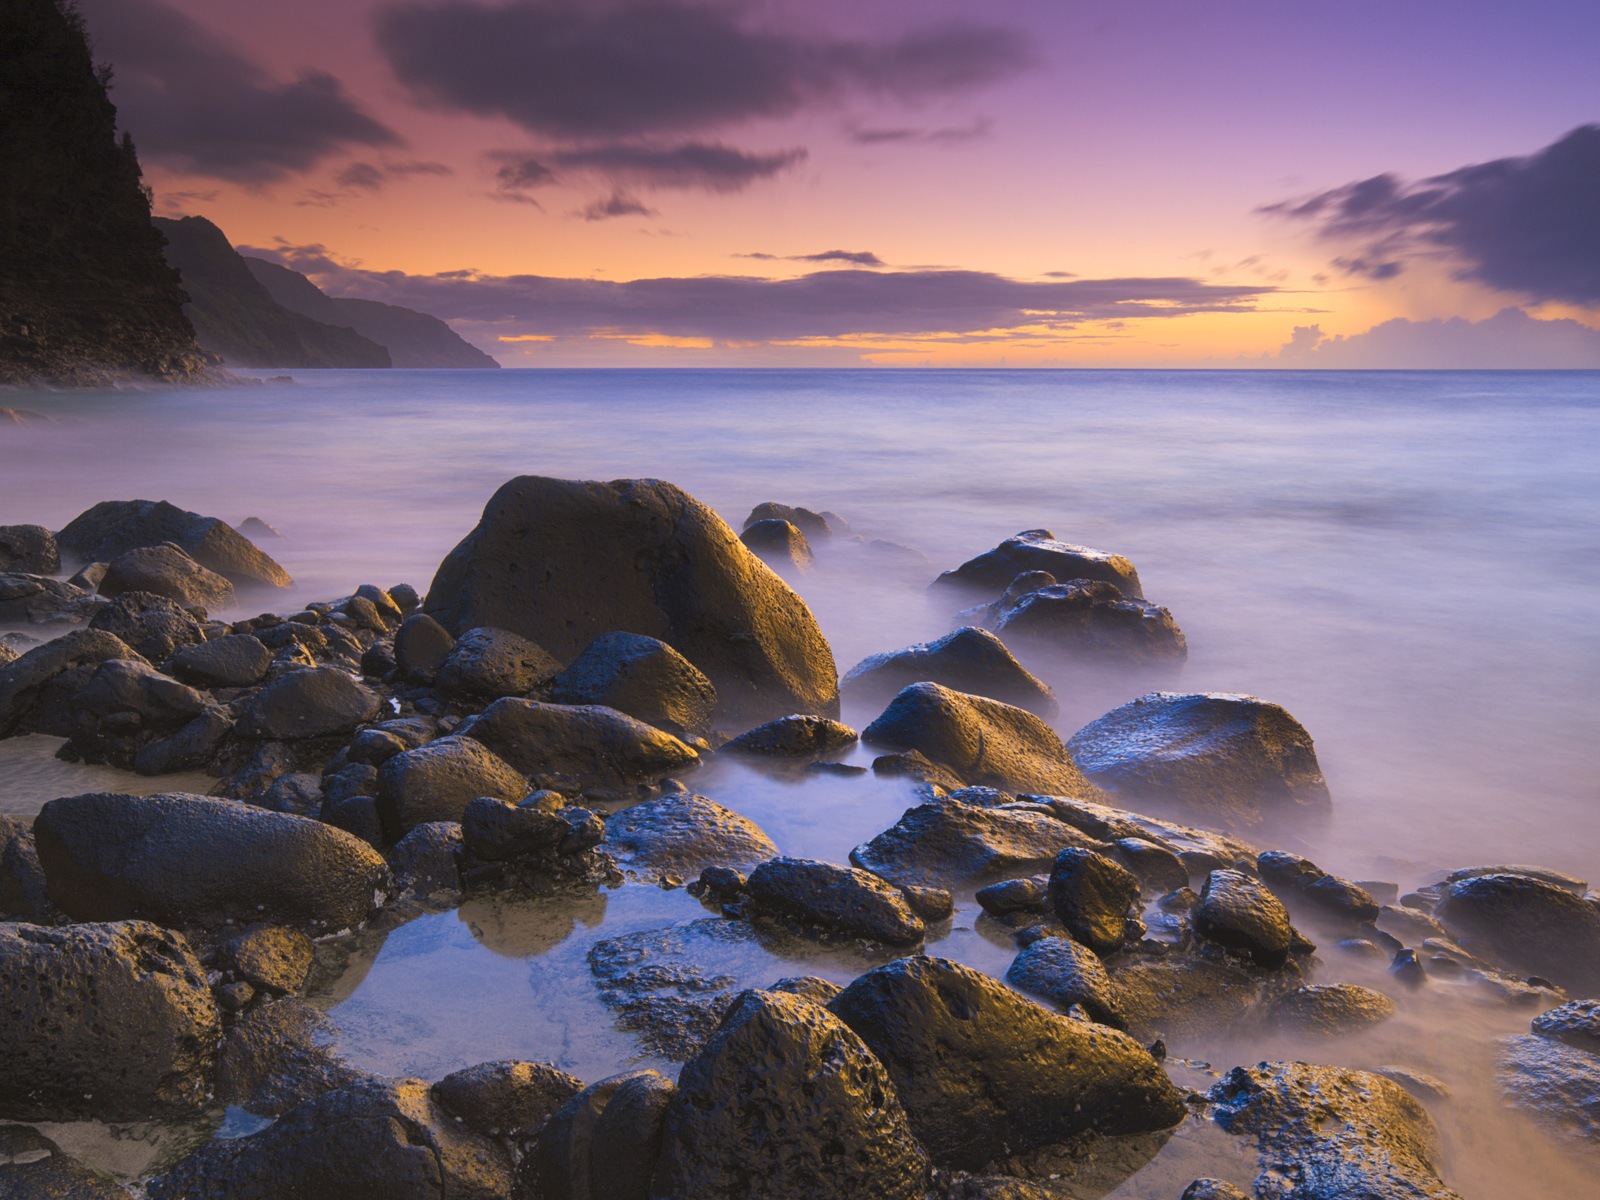 Windows 8 theme wallpaper: Beach sunrise and sunset views #7 - 1600x1200